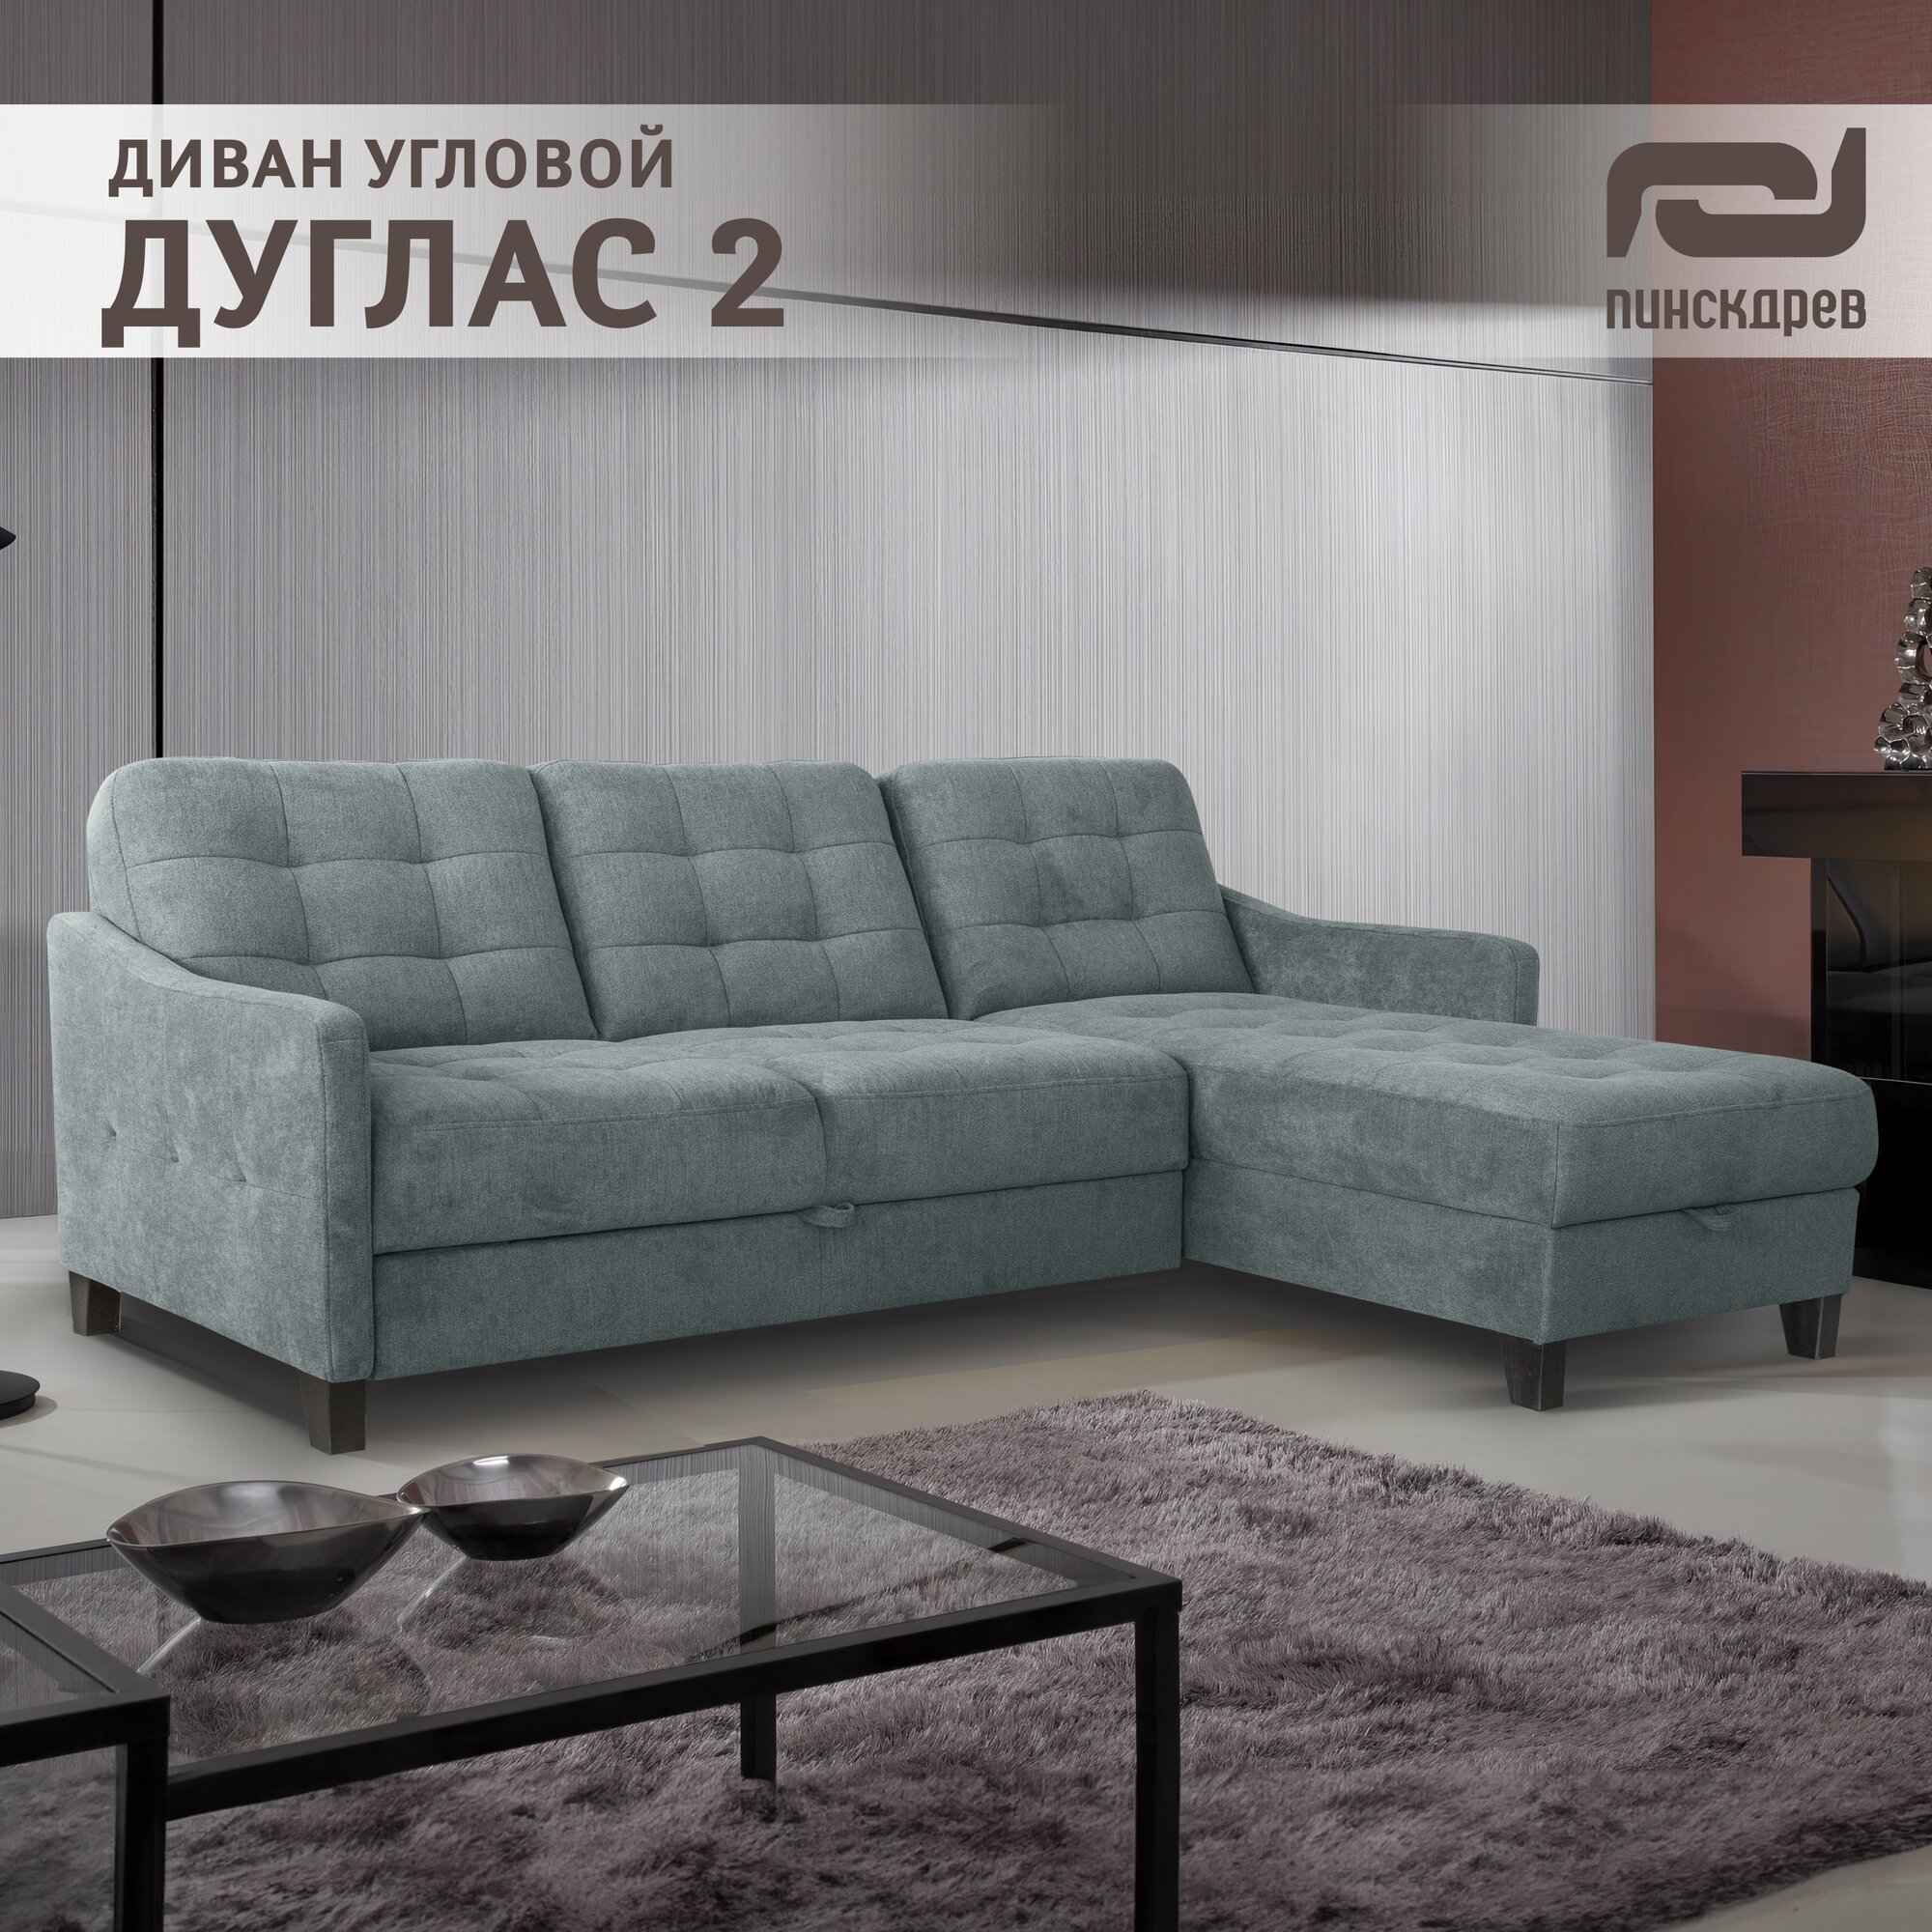 Угловой диван «Дуглас 2» 2МR8МL , светло-серый